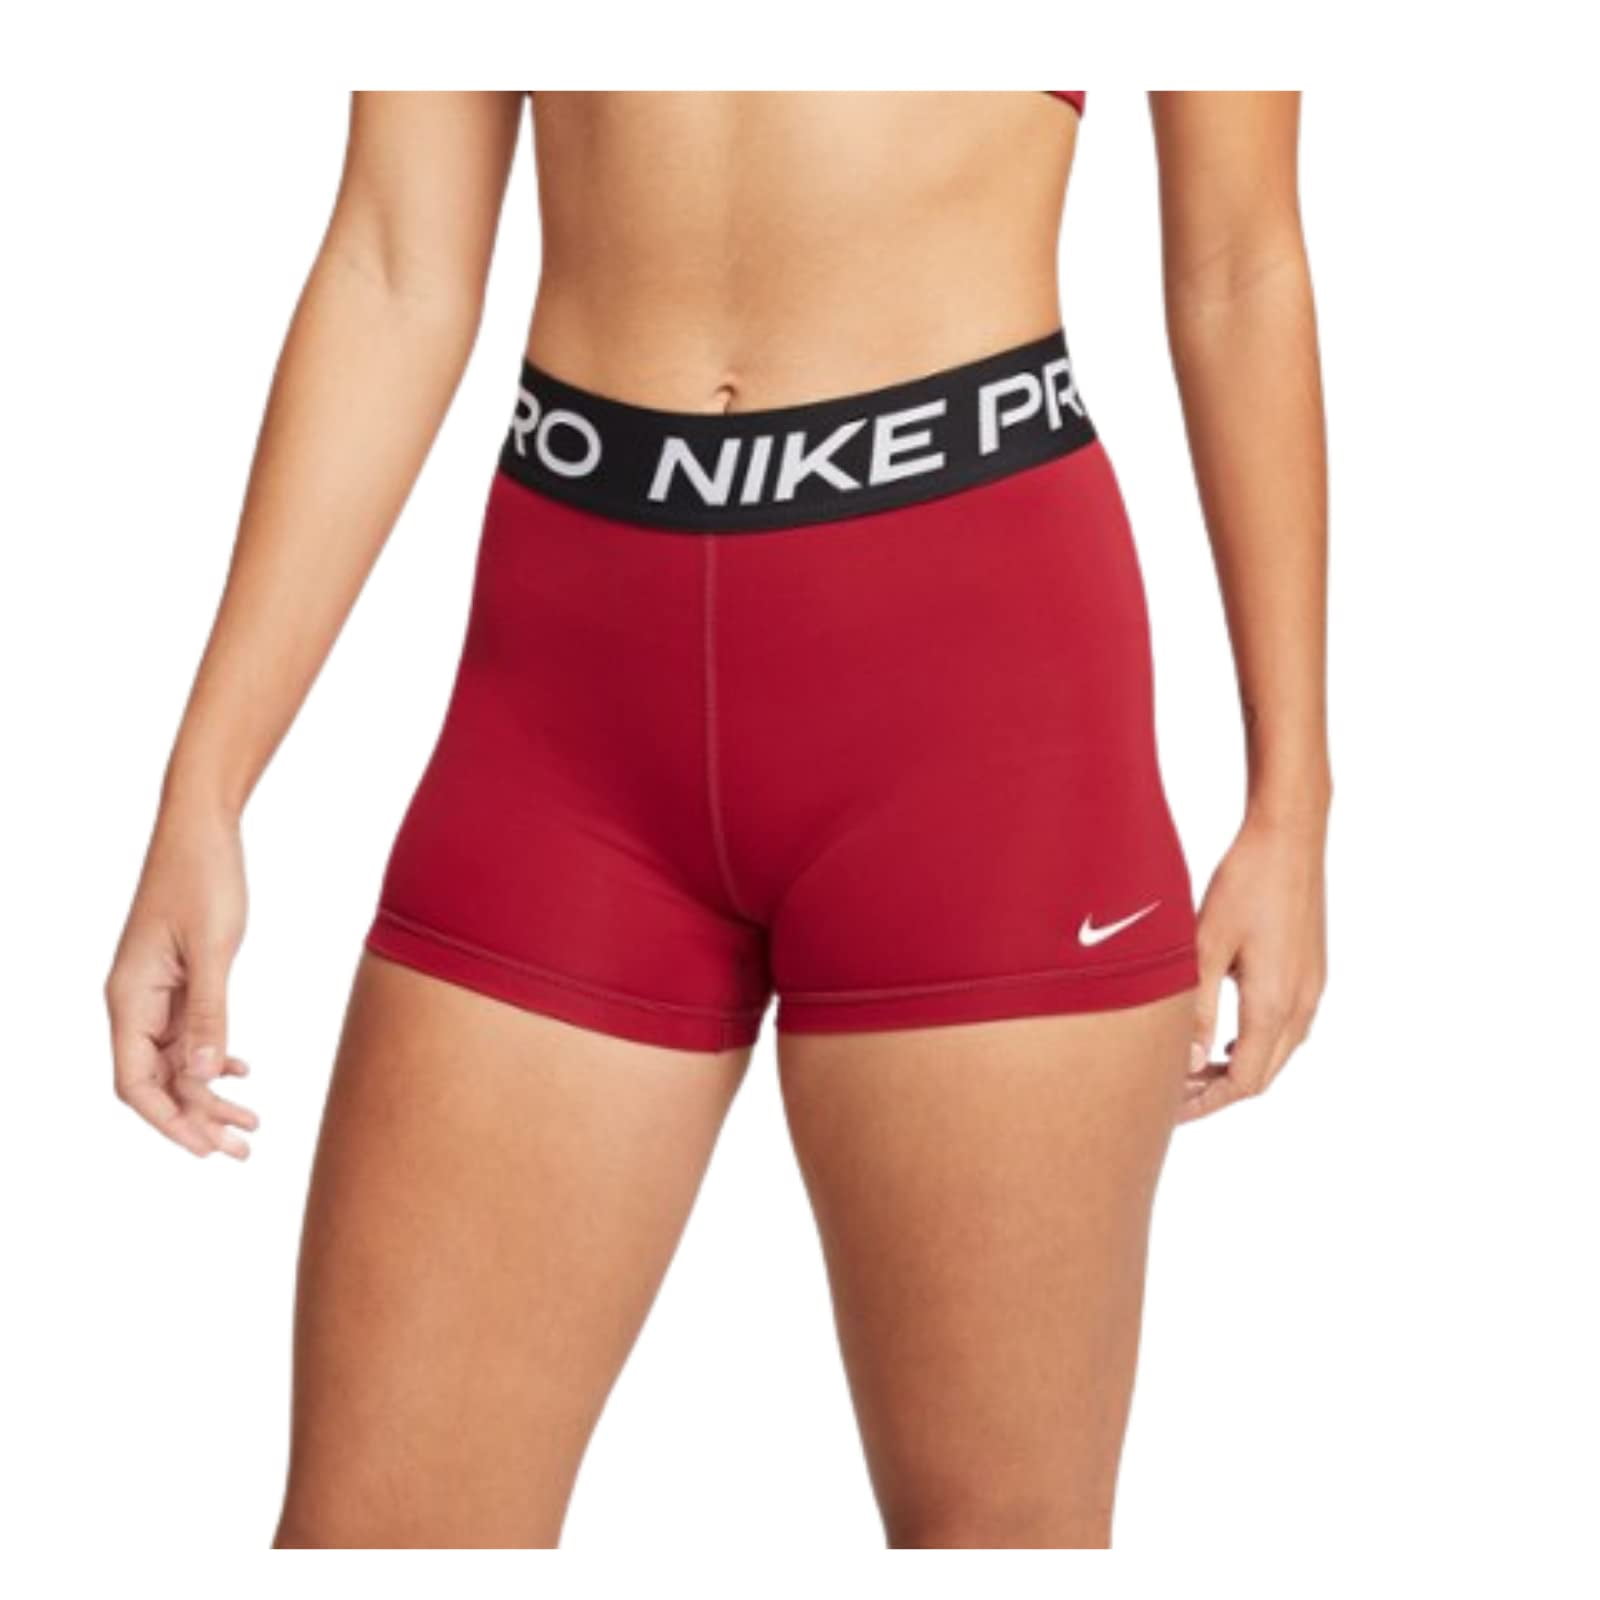 Echter muis of rat Verschrikkelijk Nike Womens Pro 3" Shorts (Red/Black, L) - Walmart.com